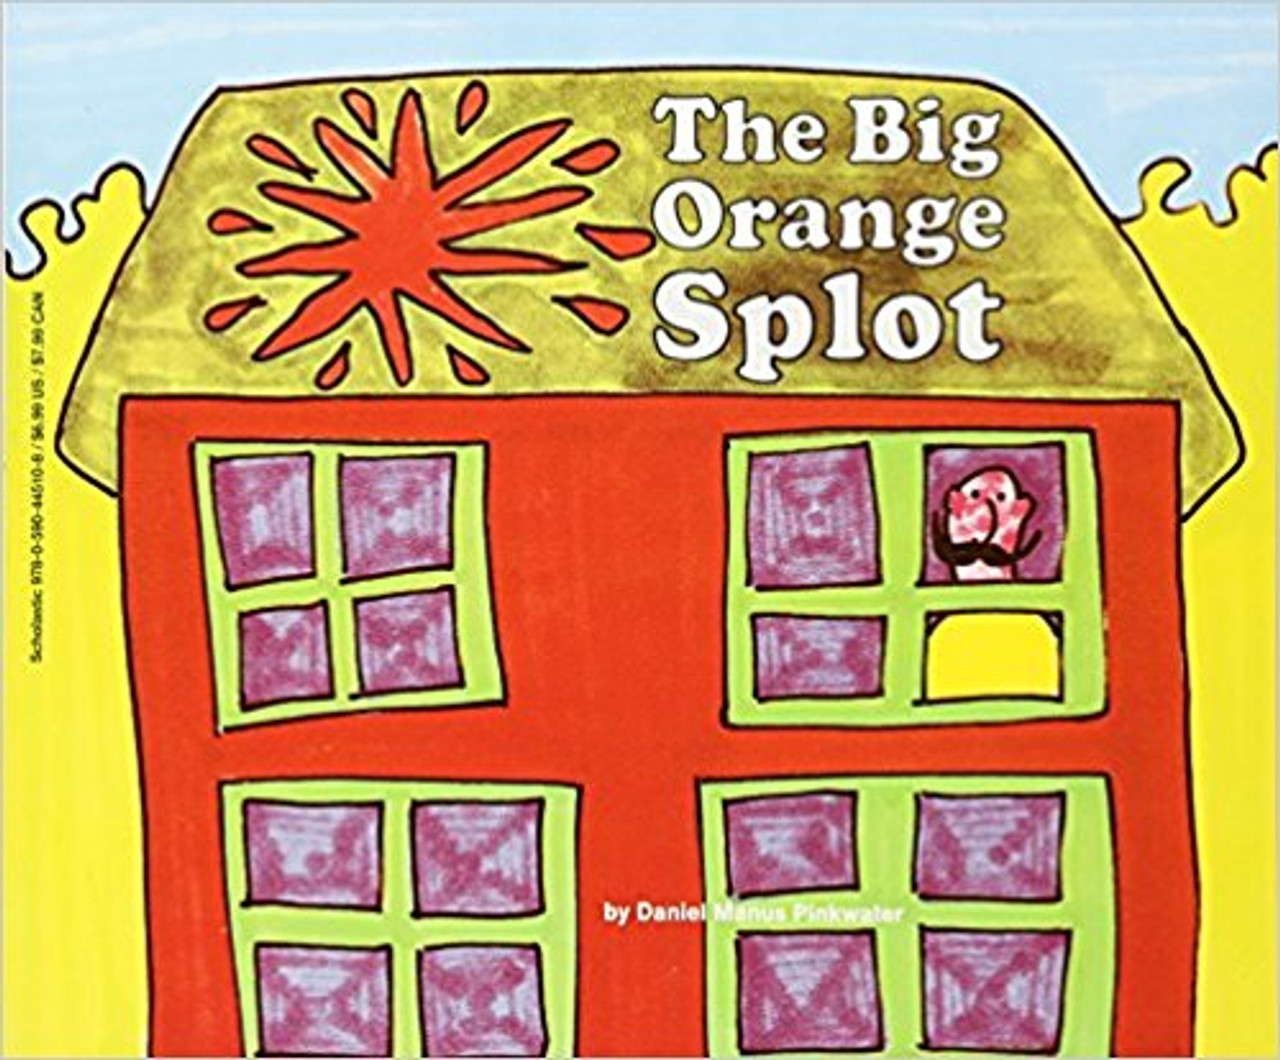 Big Orange Splot by Daniel Manus Pinkwater